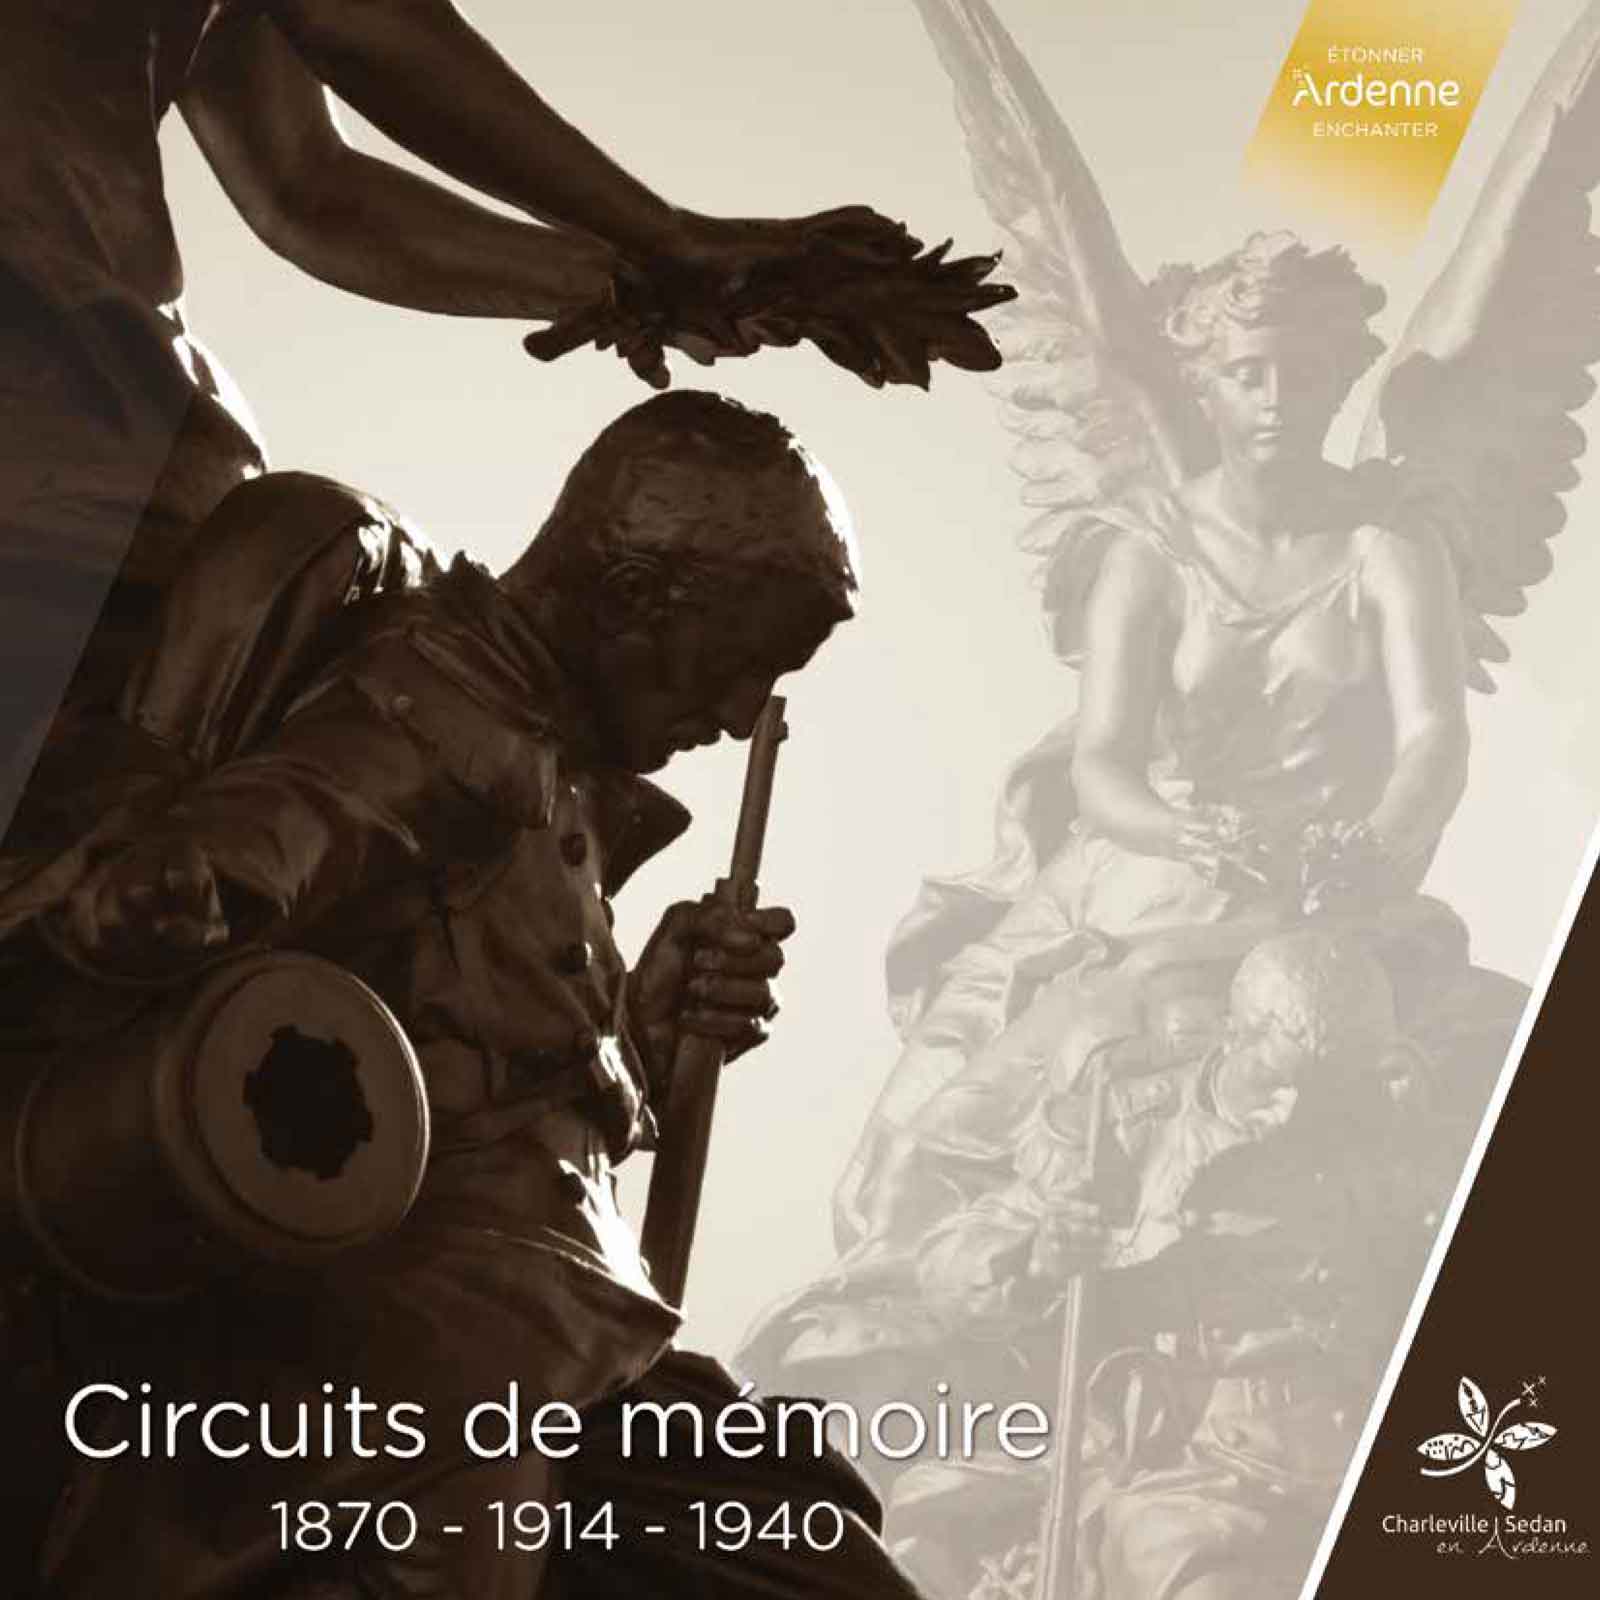 Guide "Circuits de mémoire en Pays Sedanais" (1870-1914-1940)